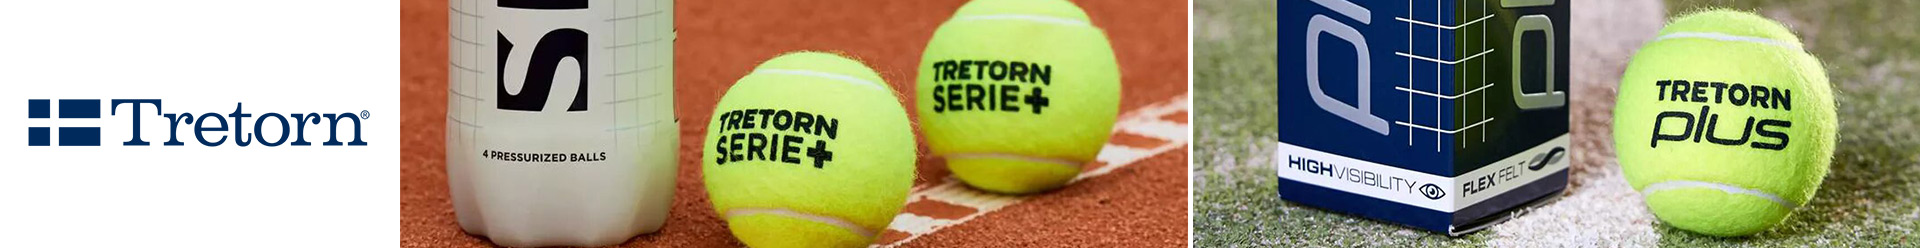 Tretorn Tennis